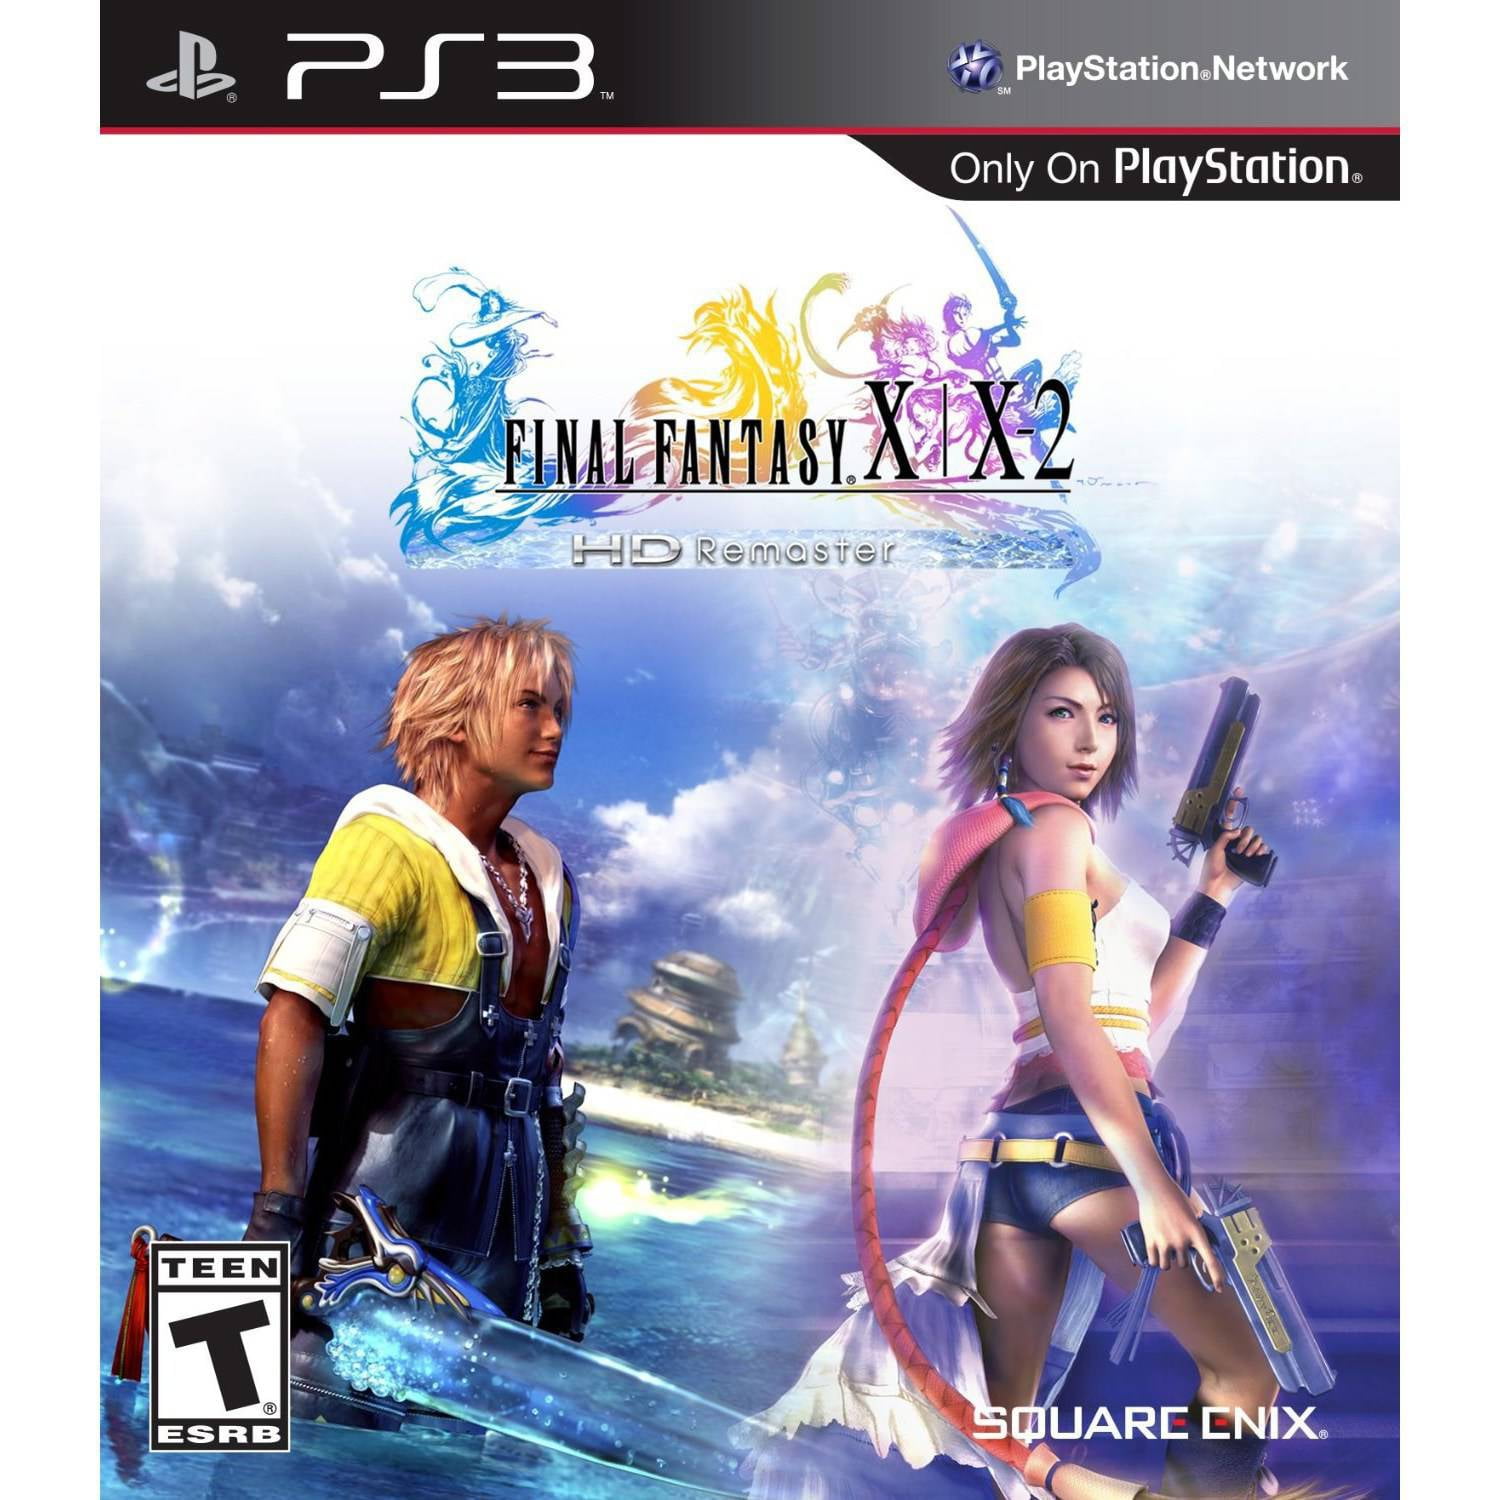 Family Fantasy Xxx Video - Final Fantasy X / X-2 HD Remaster, Square Enix, PlayStation 3, [Physical],  662248912264 - Walmart.com